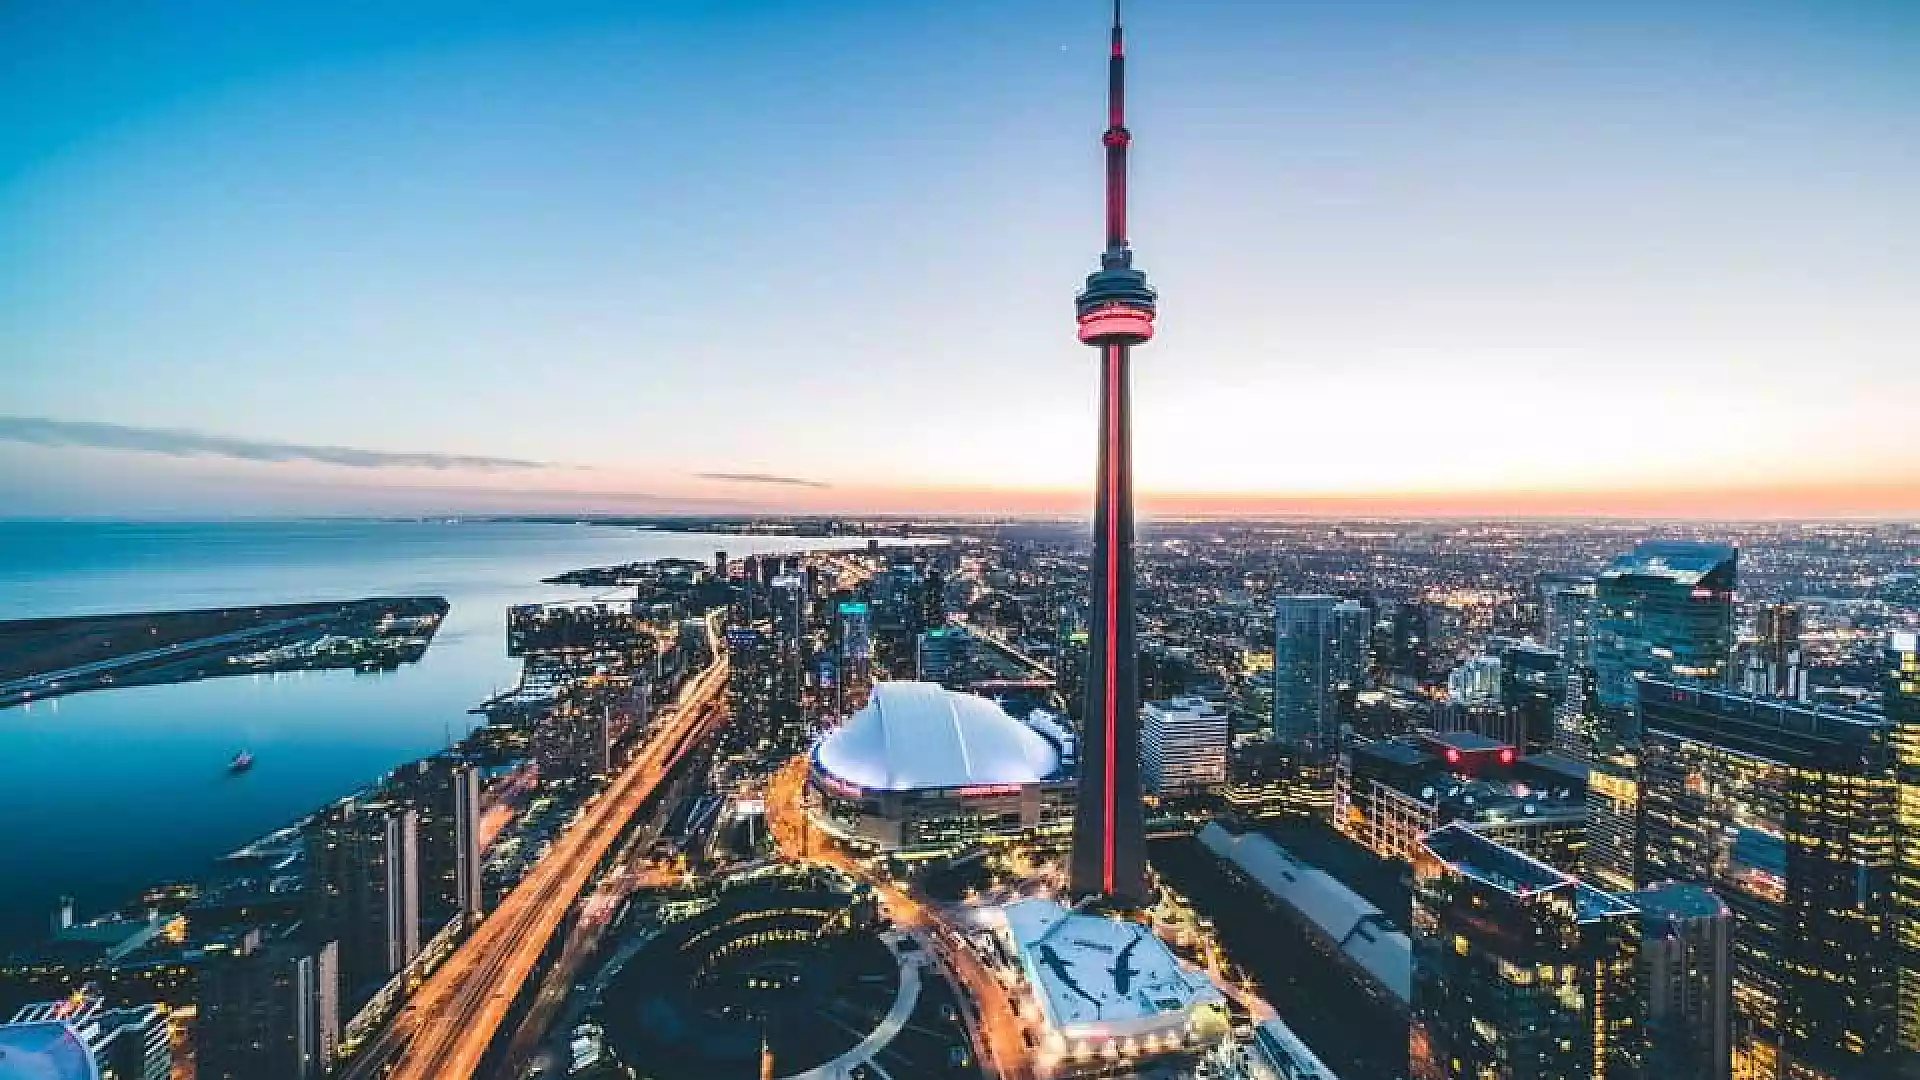 Location Toronto CN Tower